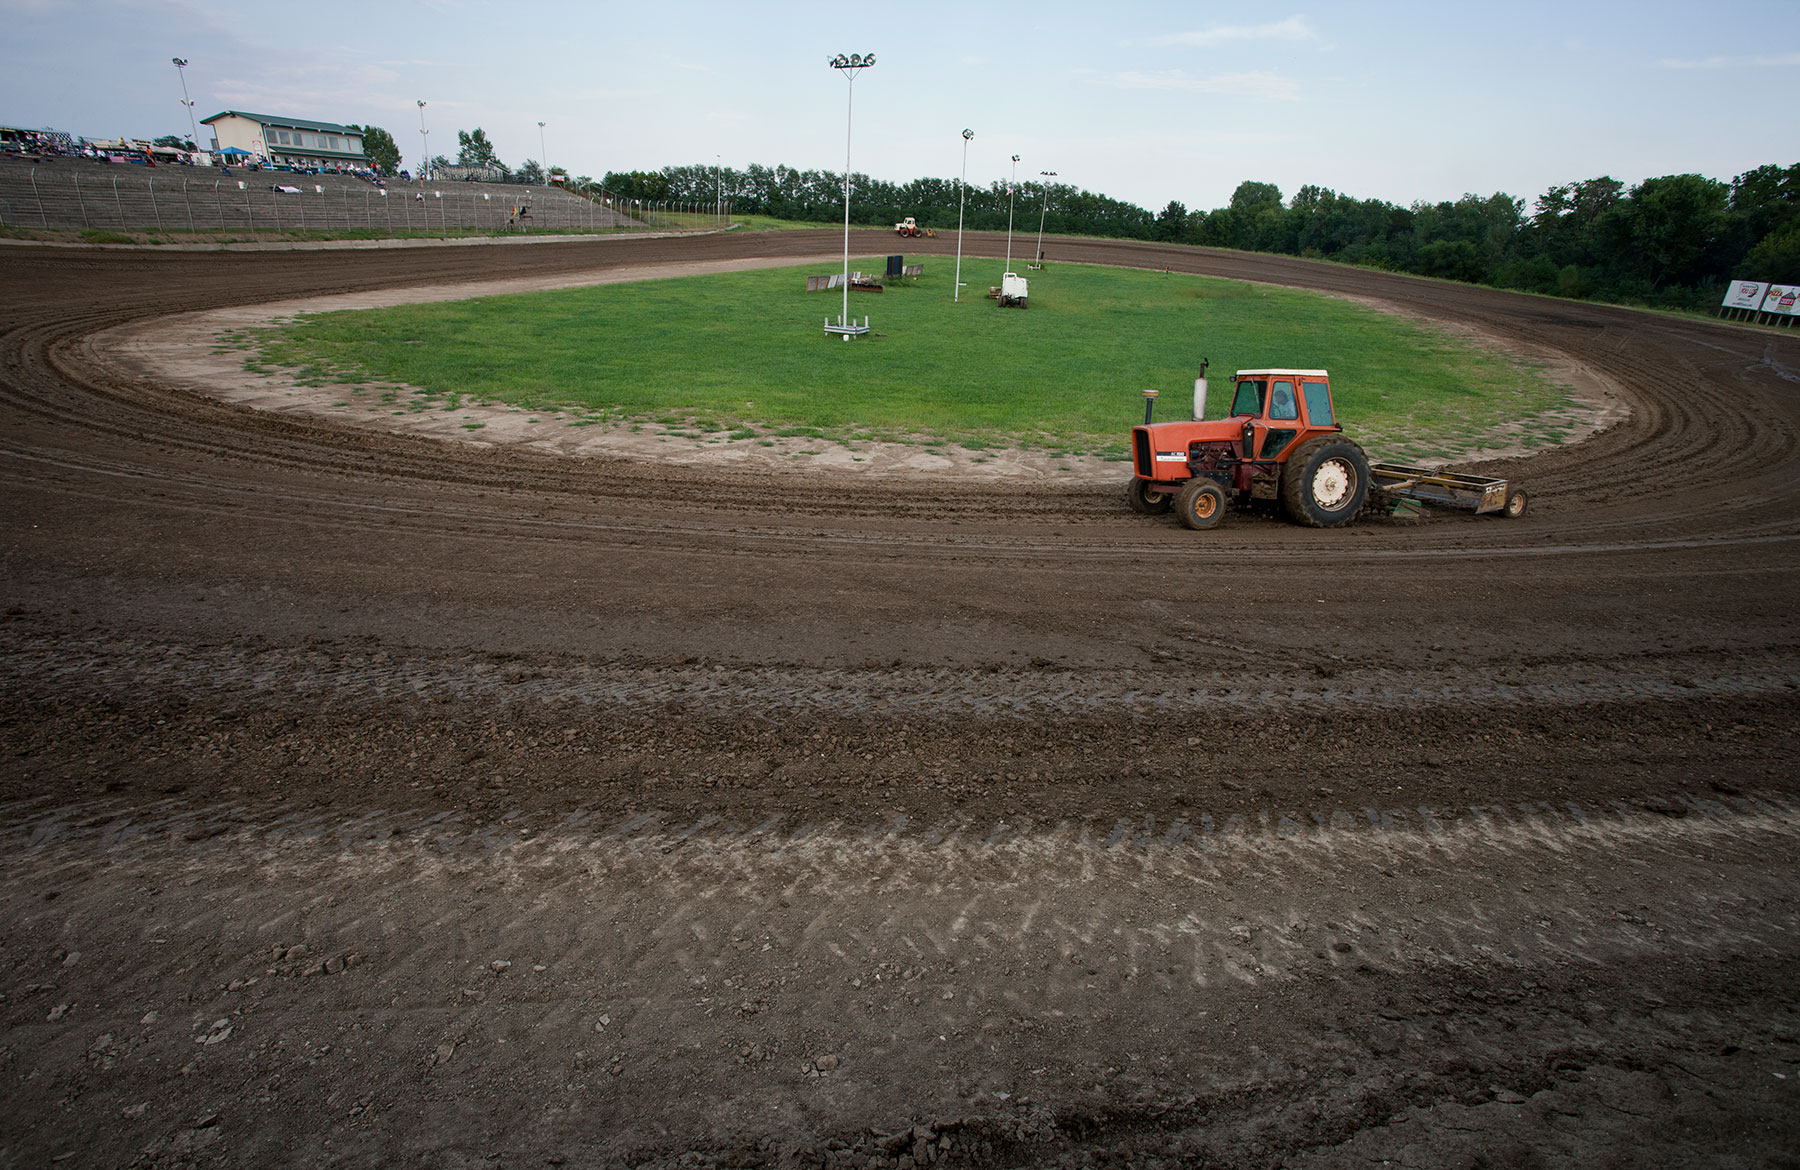 Matt Hoover Photography Drag Racing Dirt Track 